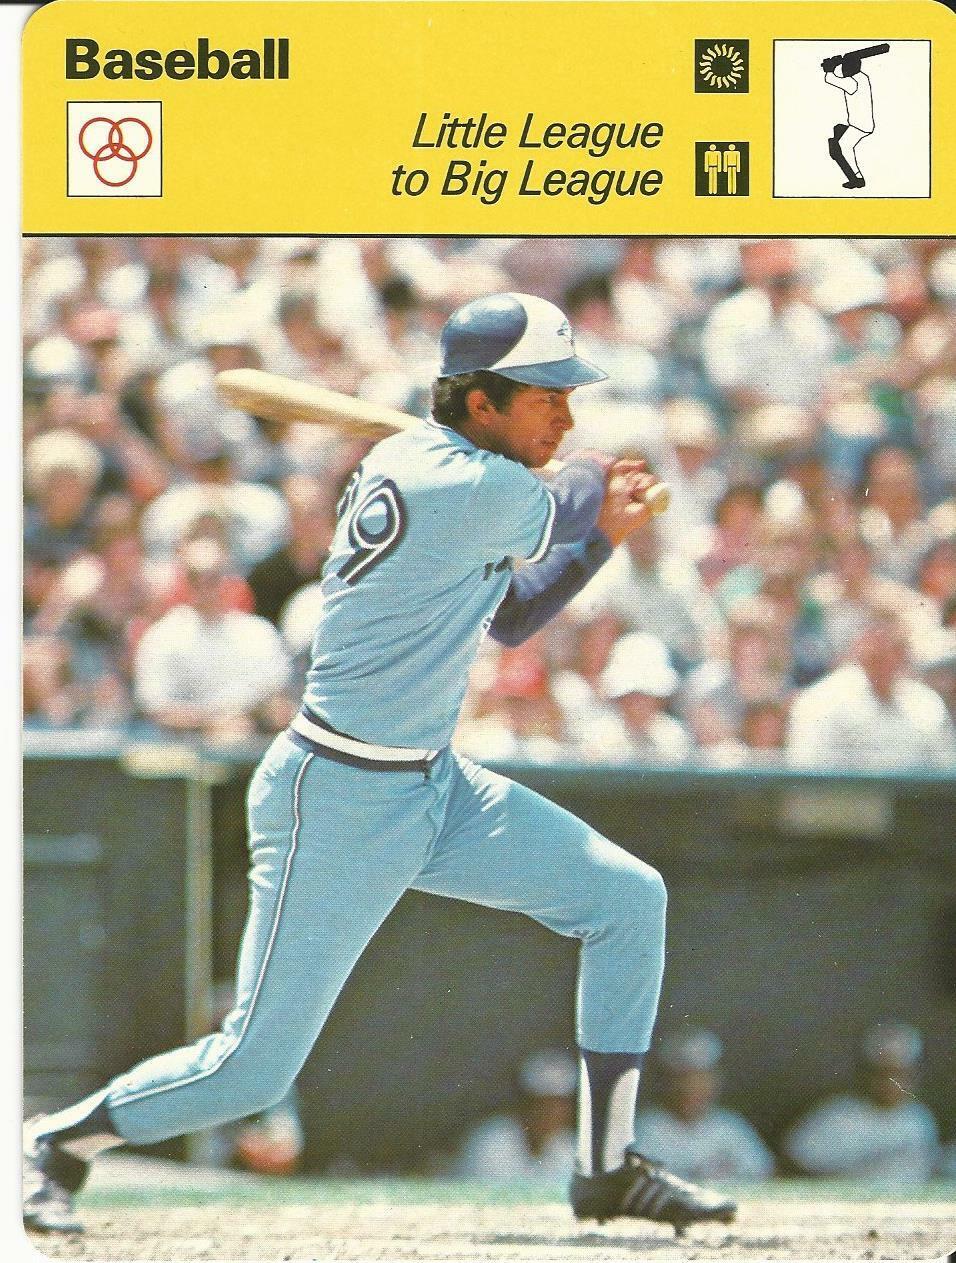 1977-79 Sportscaster Card, #69.17 Baseball, Hector Torres, Blue Jays